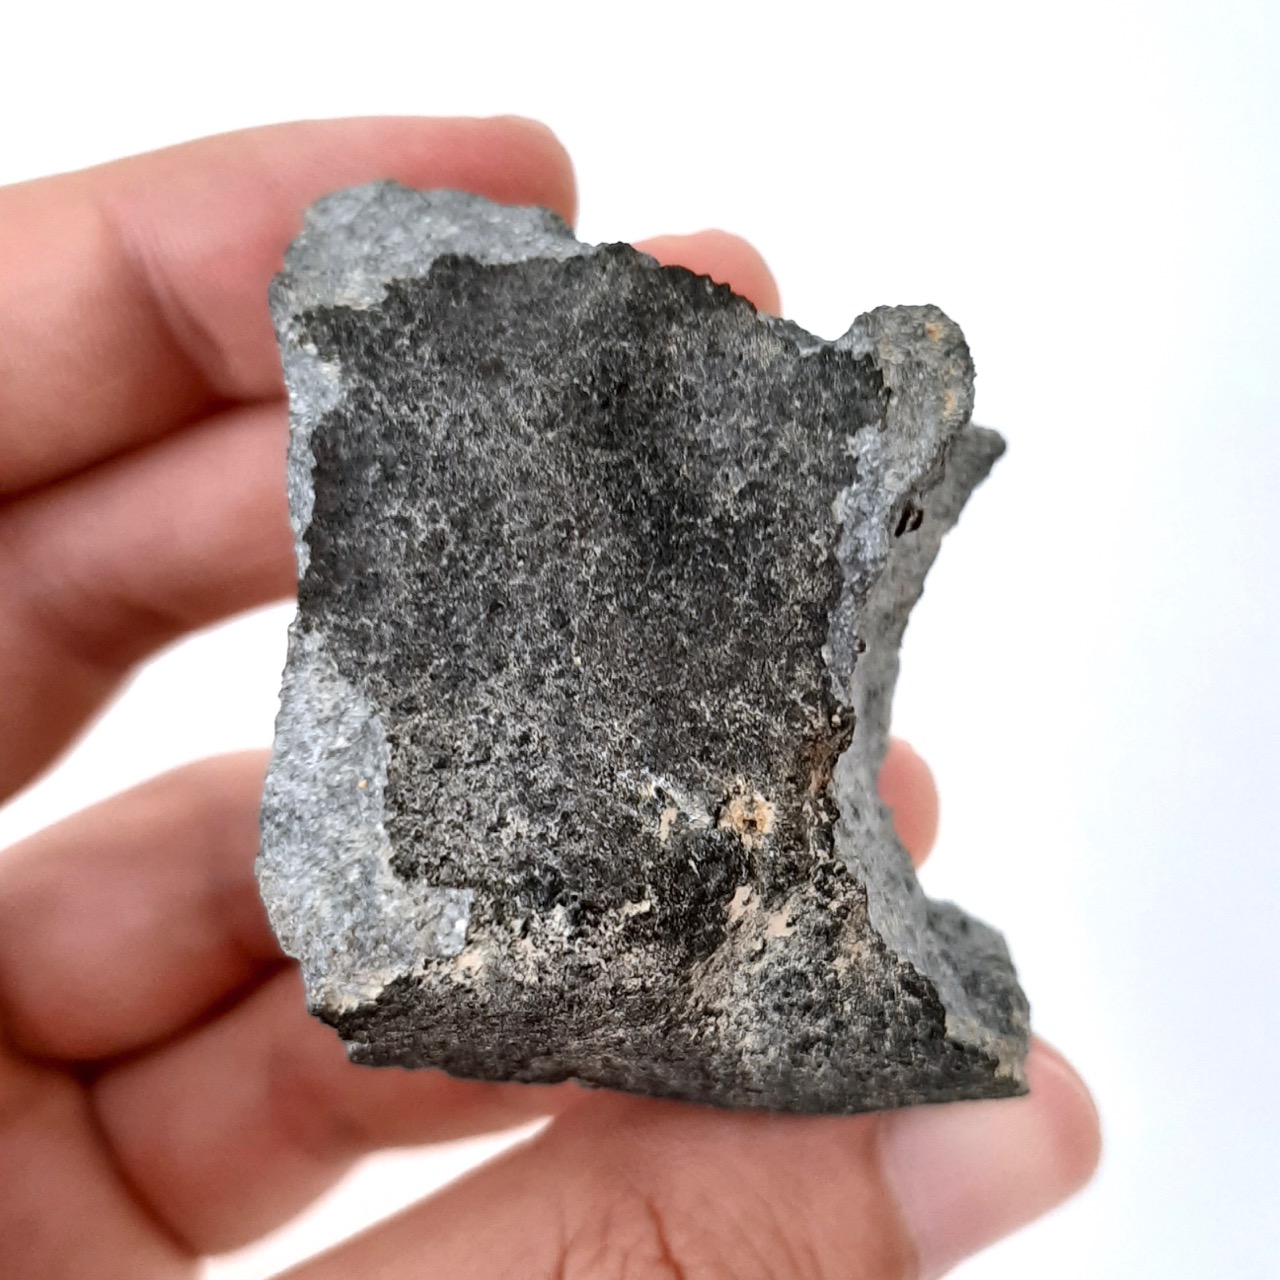 Aiquile meteorite. Bolivian H5 chondrite. Freshest.